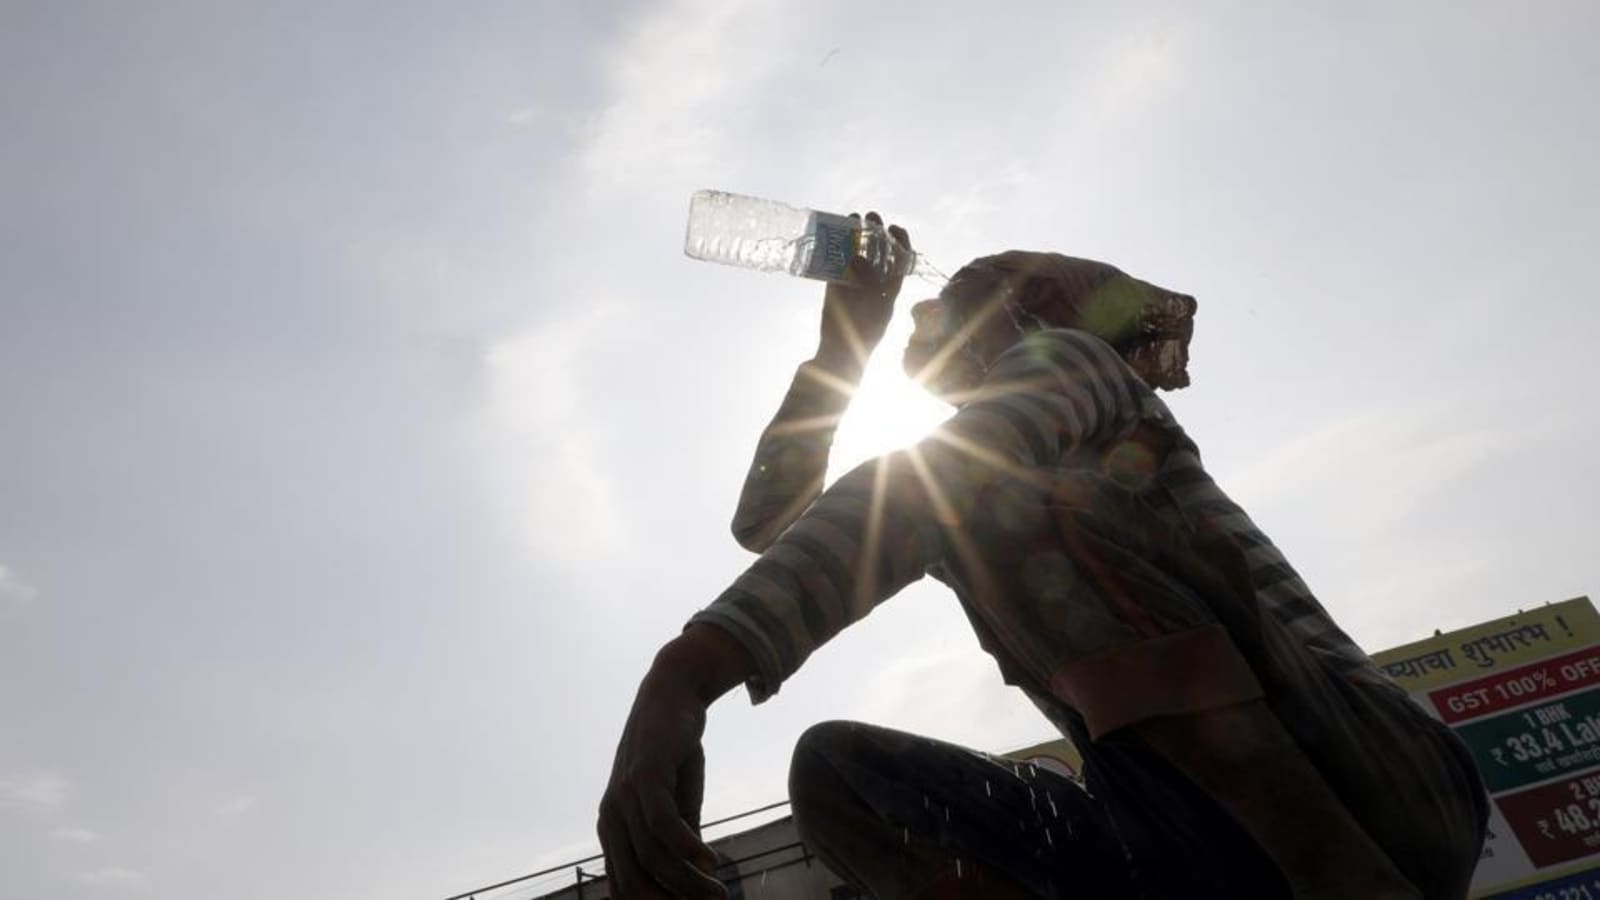 At 45 degrees, Gurugram records highest-ever temperature in April